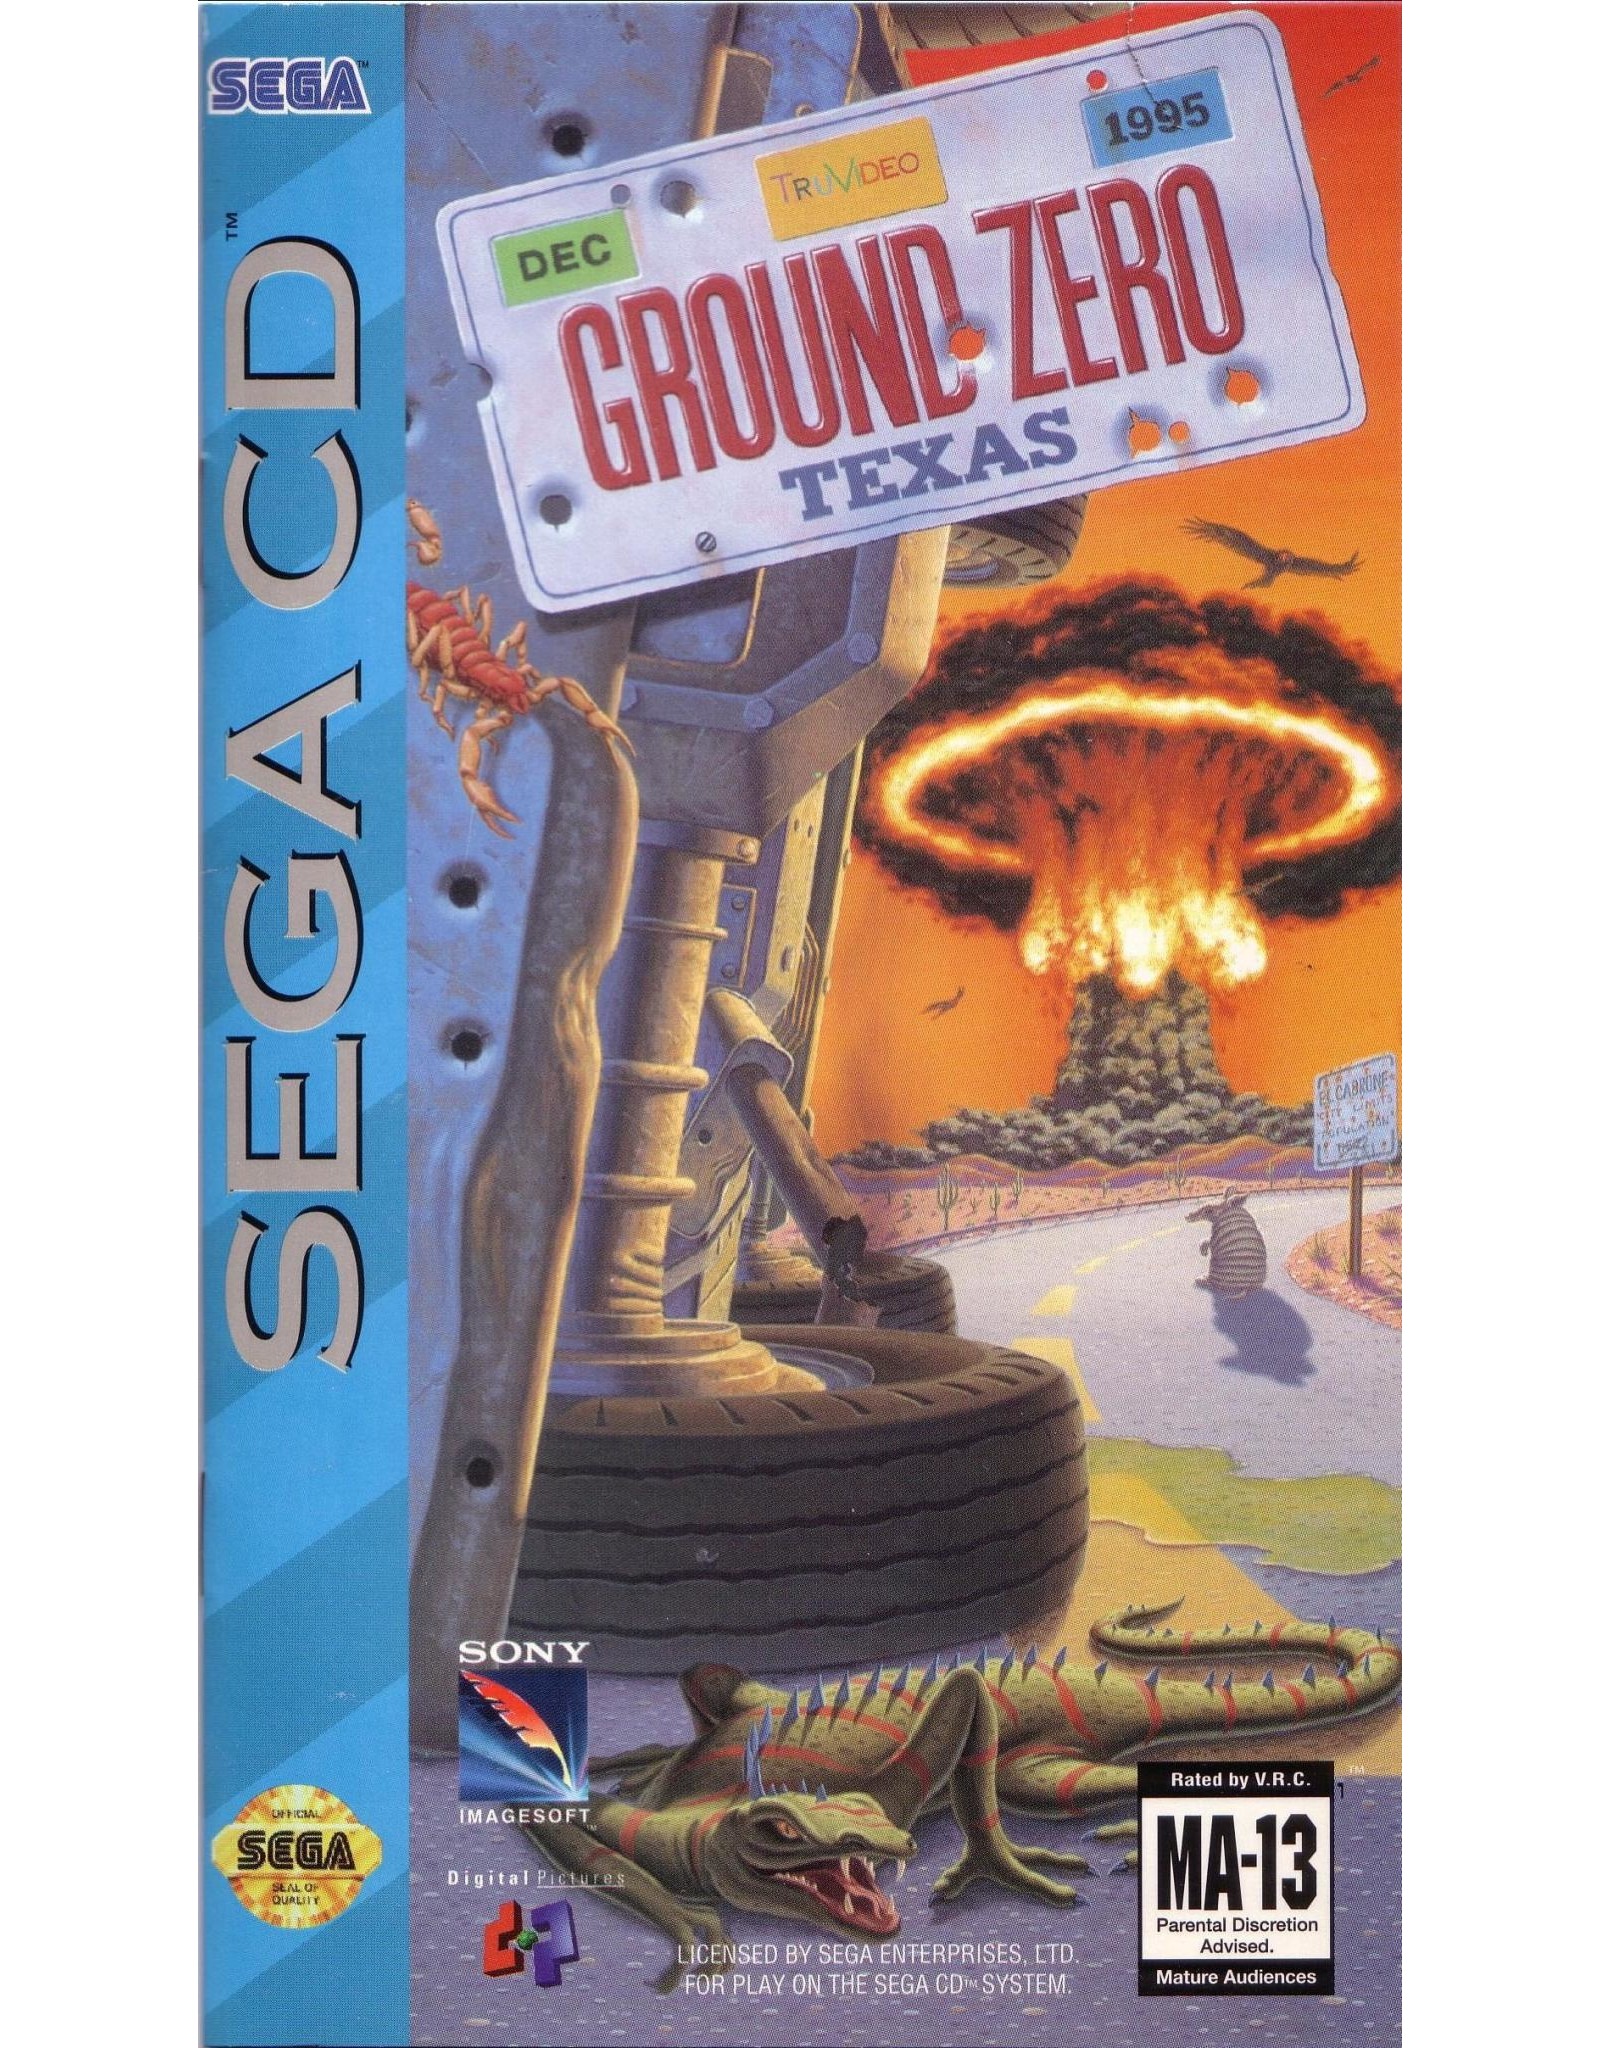 Sega CD Ground Zero Texas (CiB, Damaged Case)